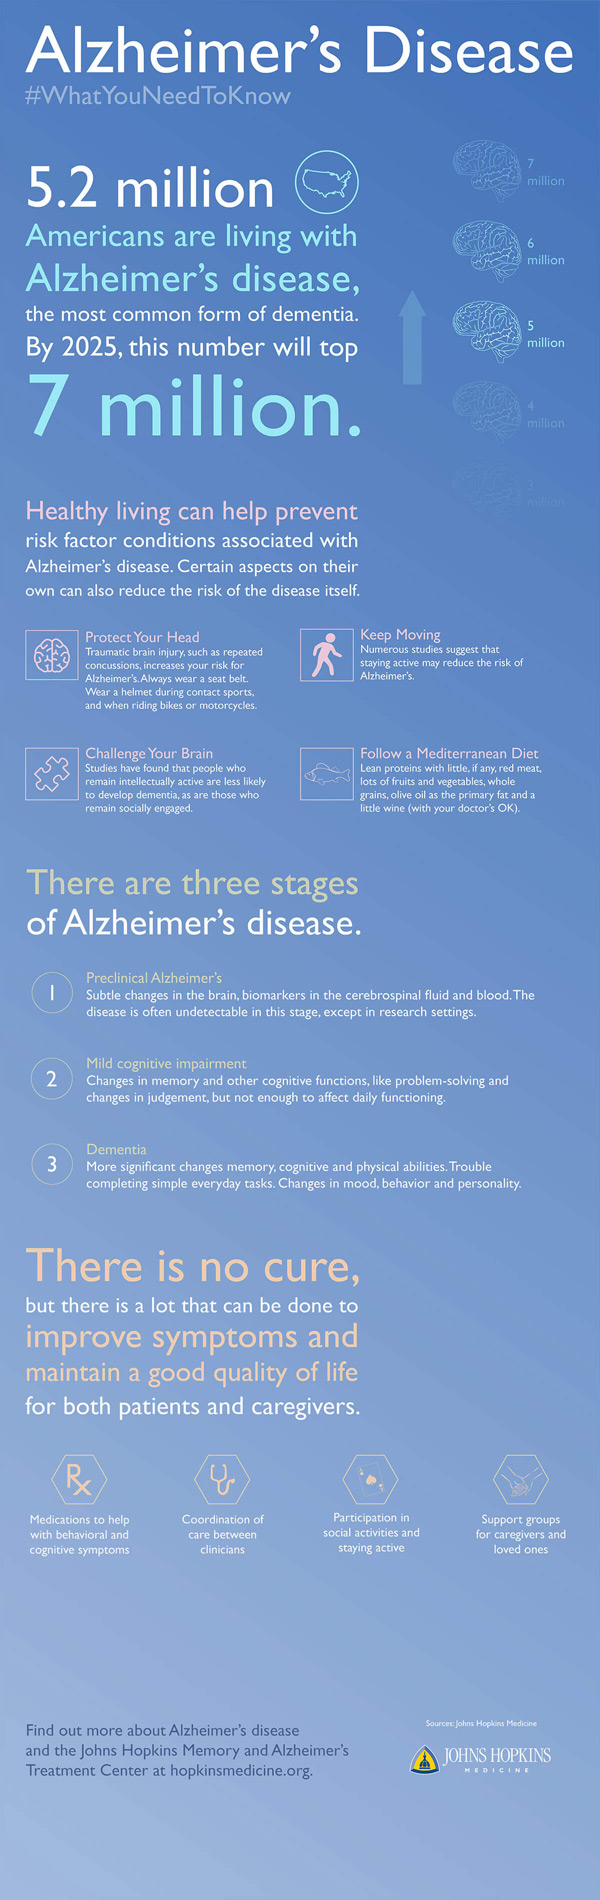 Alzheimer’s Disease: Infographic